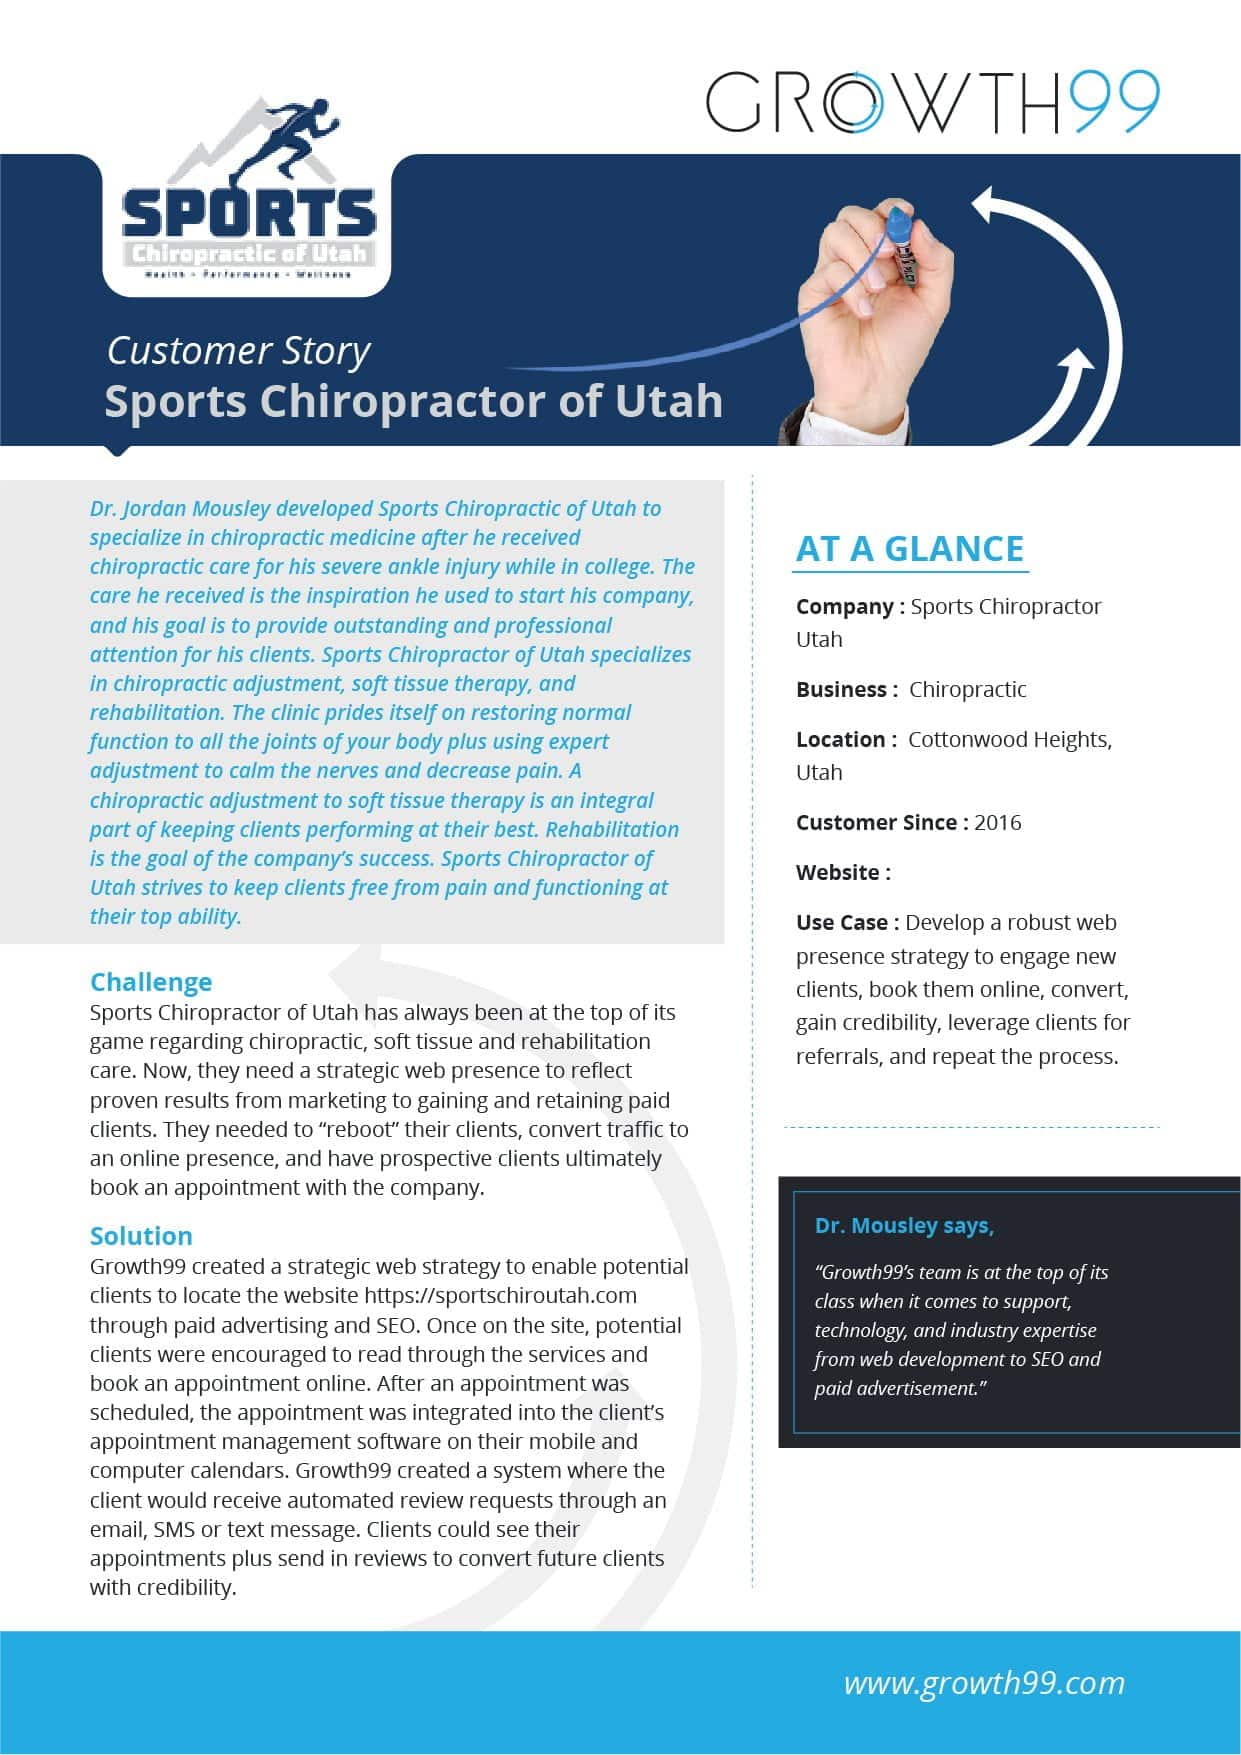 Sports Chiropractor of Utah Case Study